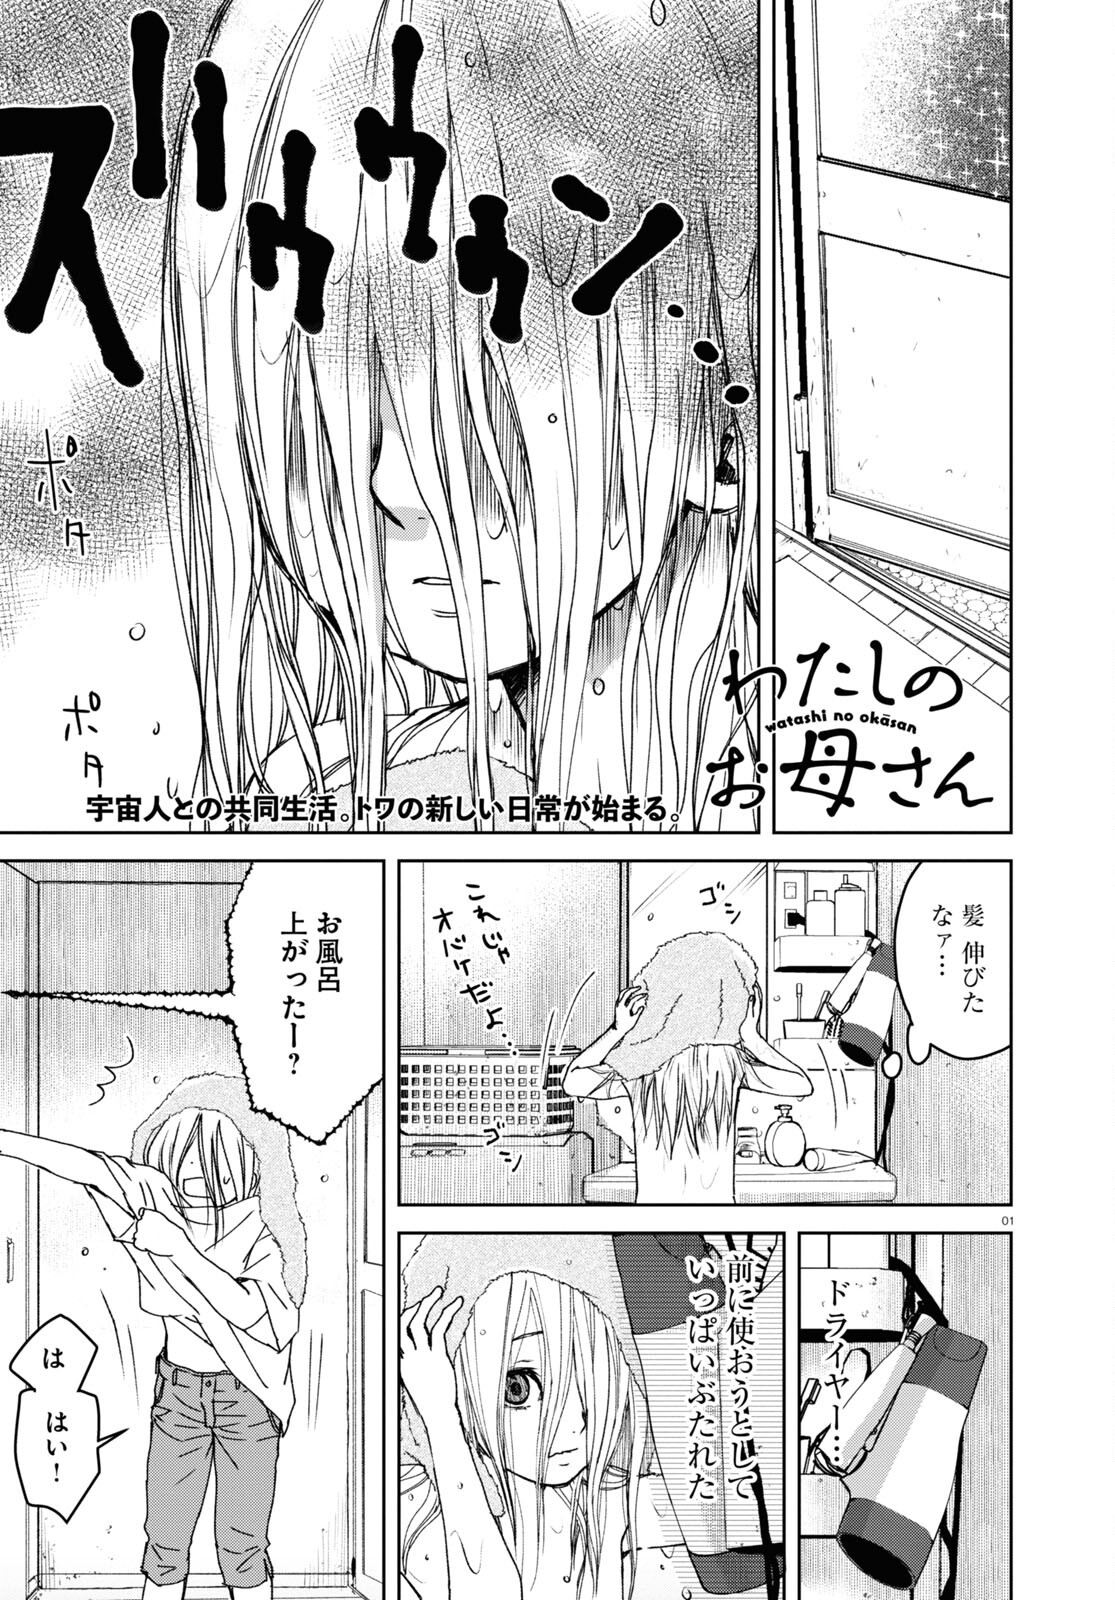 Watashi no Okaa-san (USAYA Mame) - Chapter 2 - Page 1